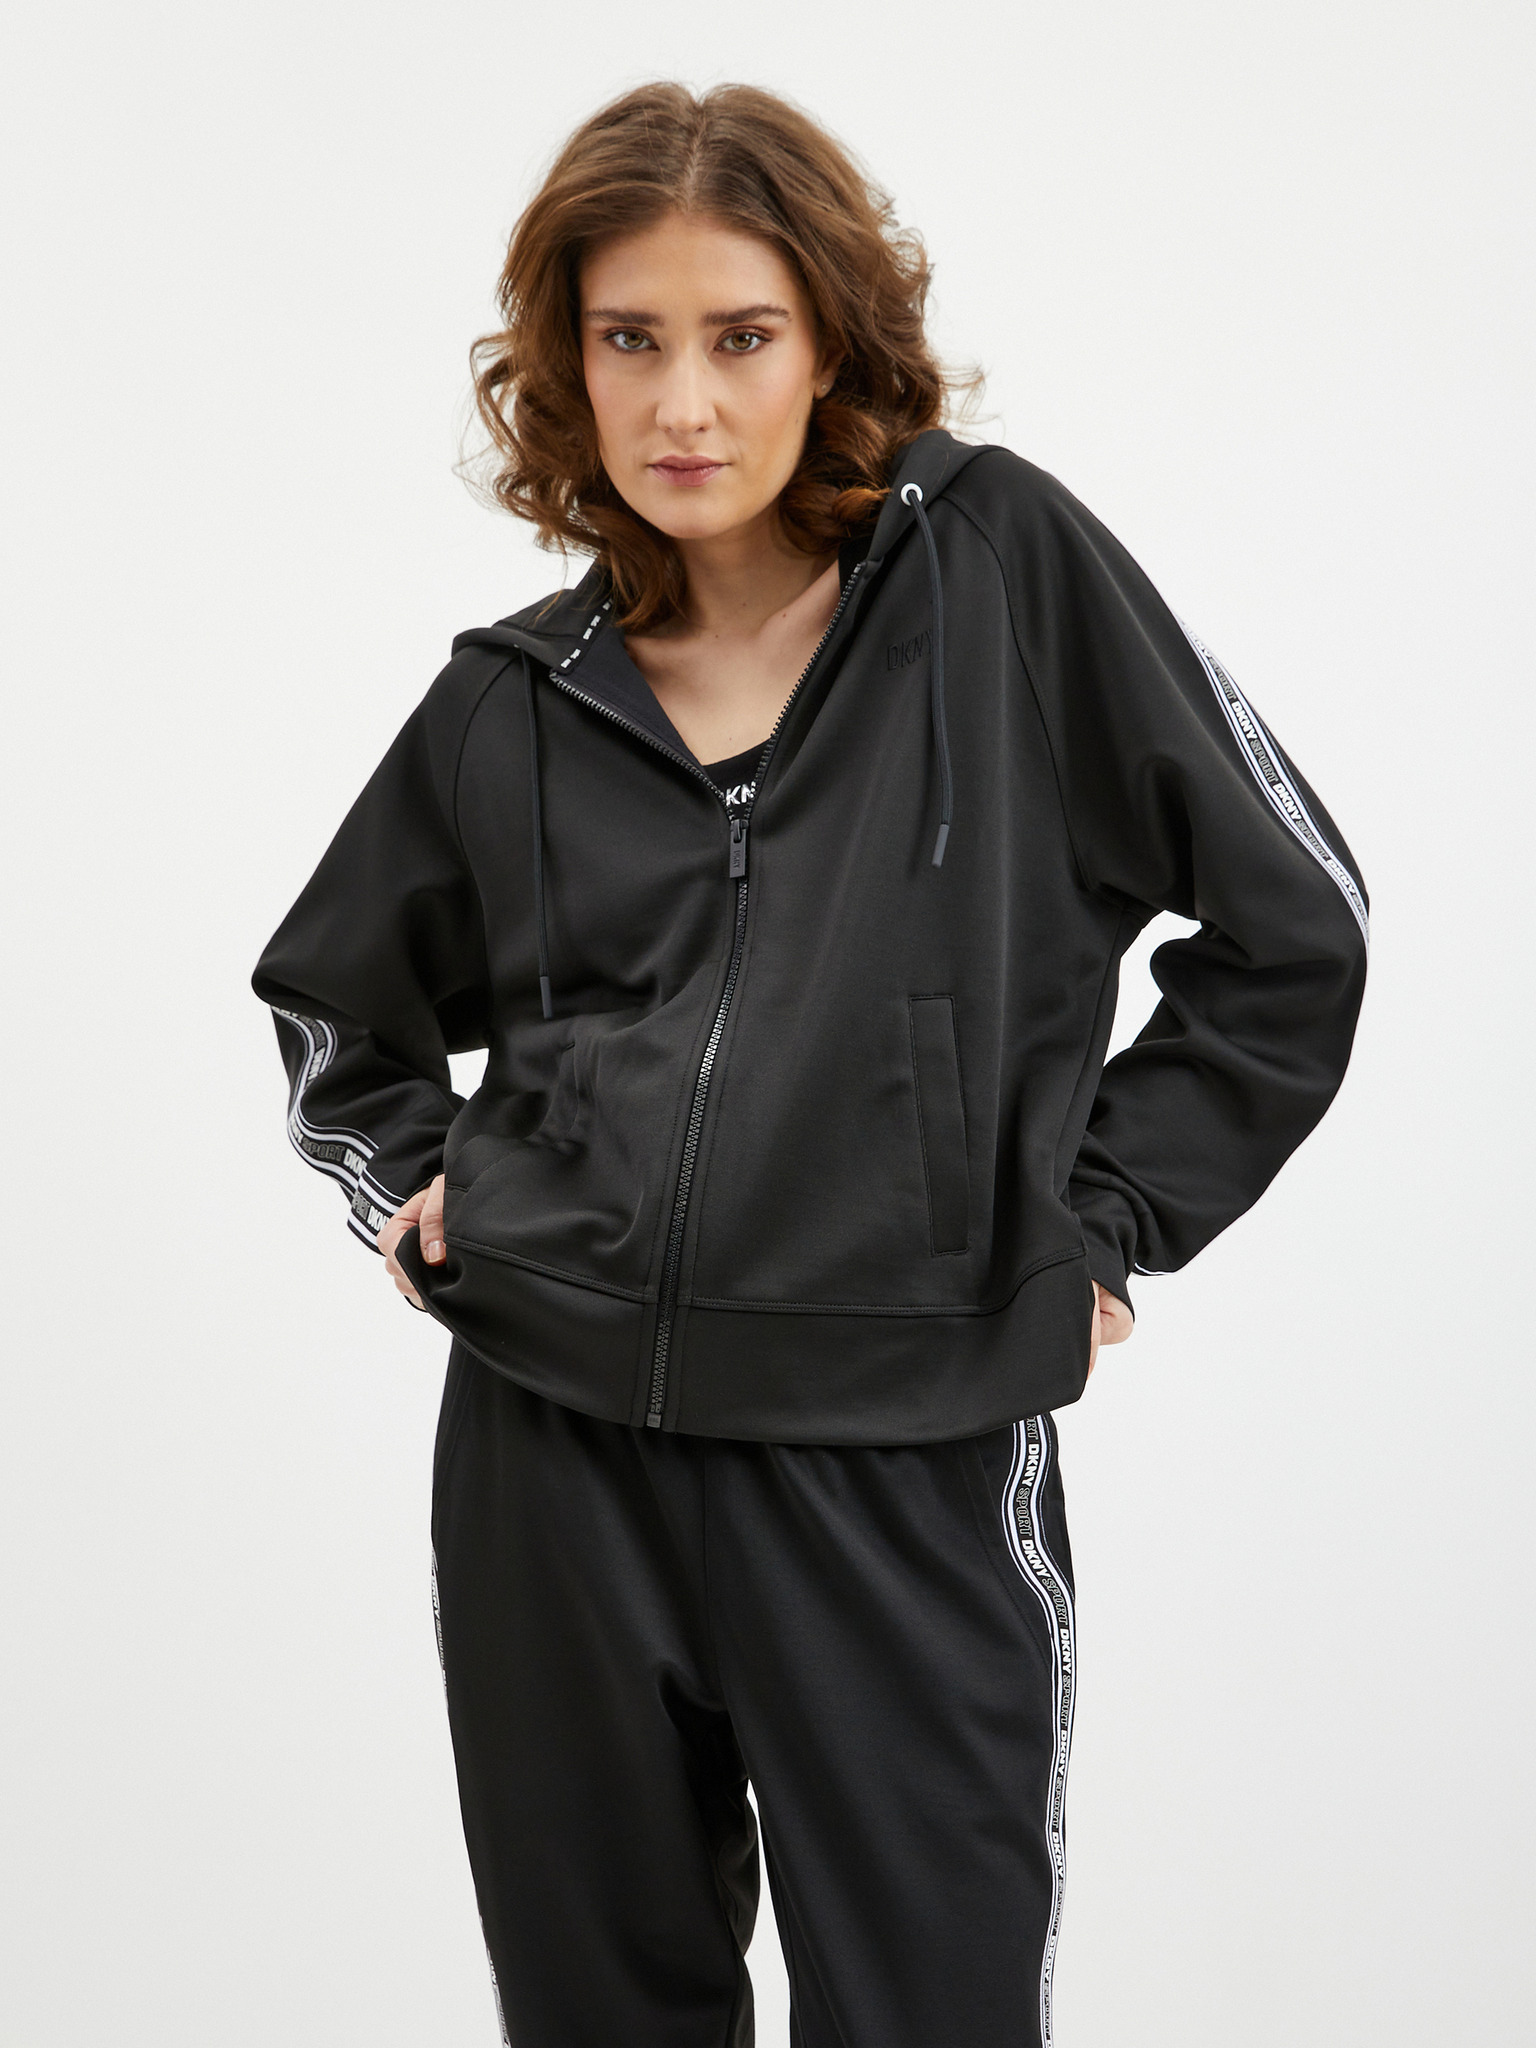 DKNY Women's Sport Ottoman-Knit Hoodie (X-Large, Black)